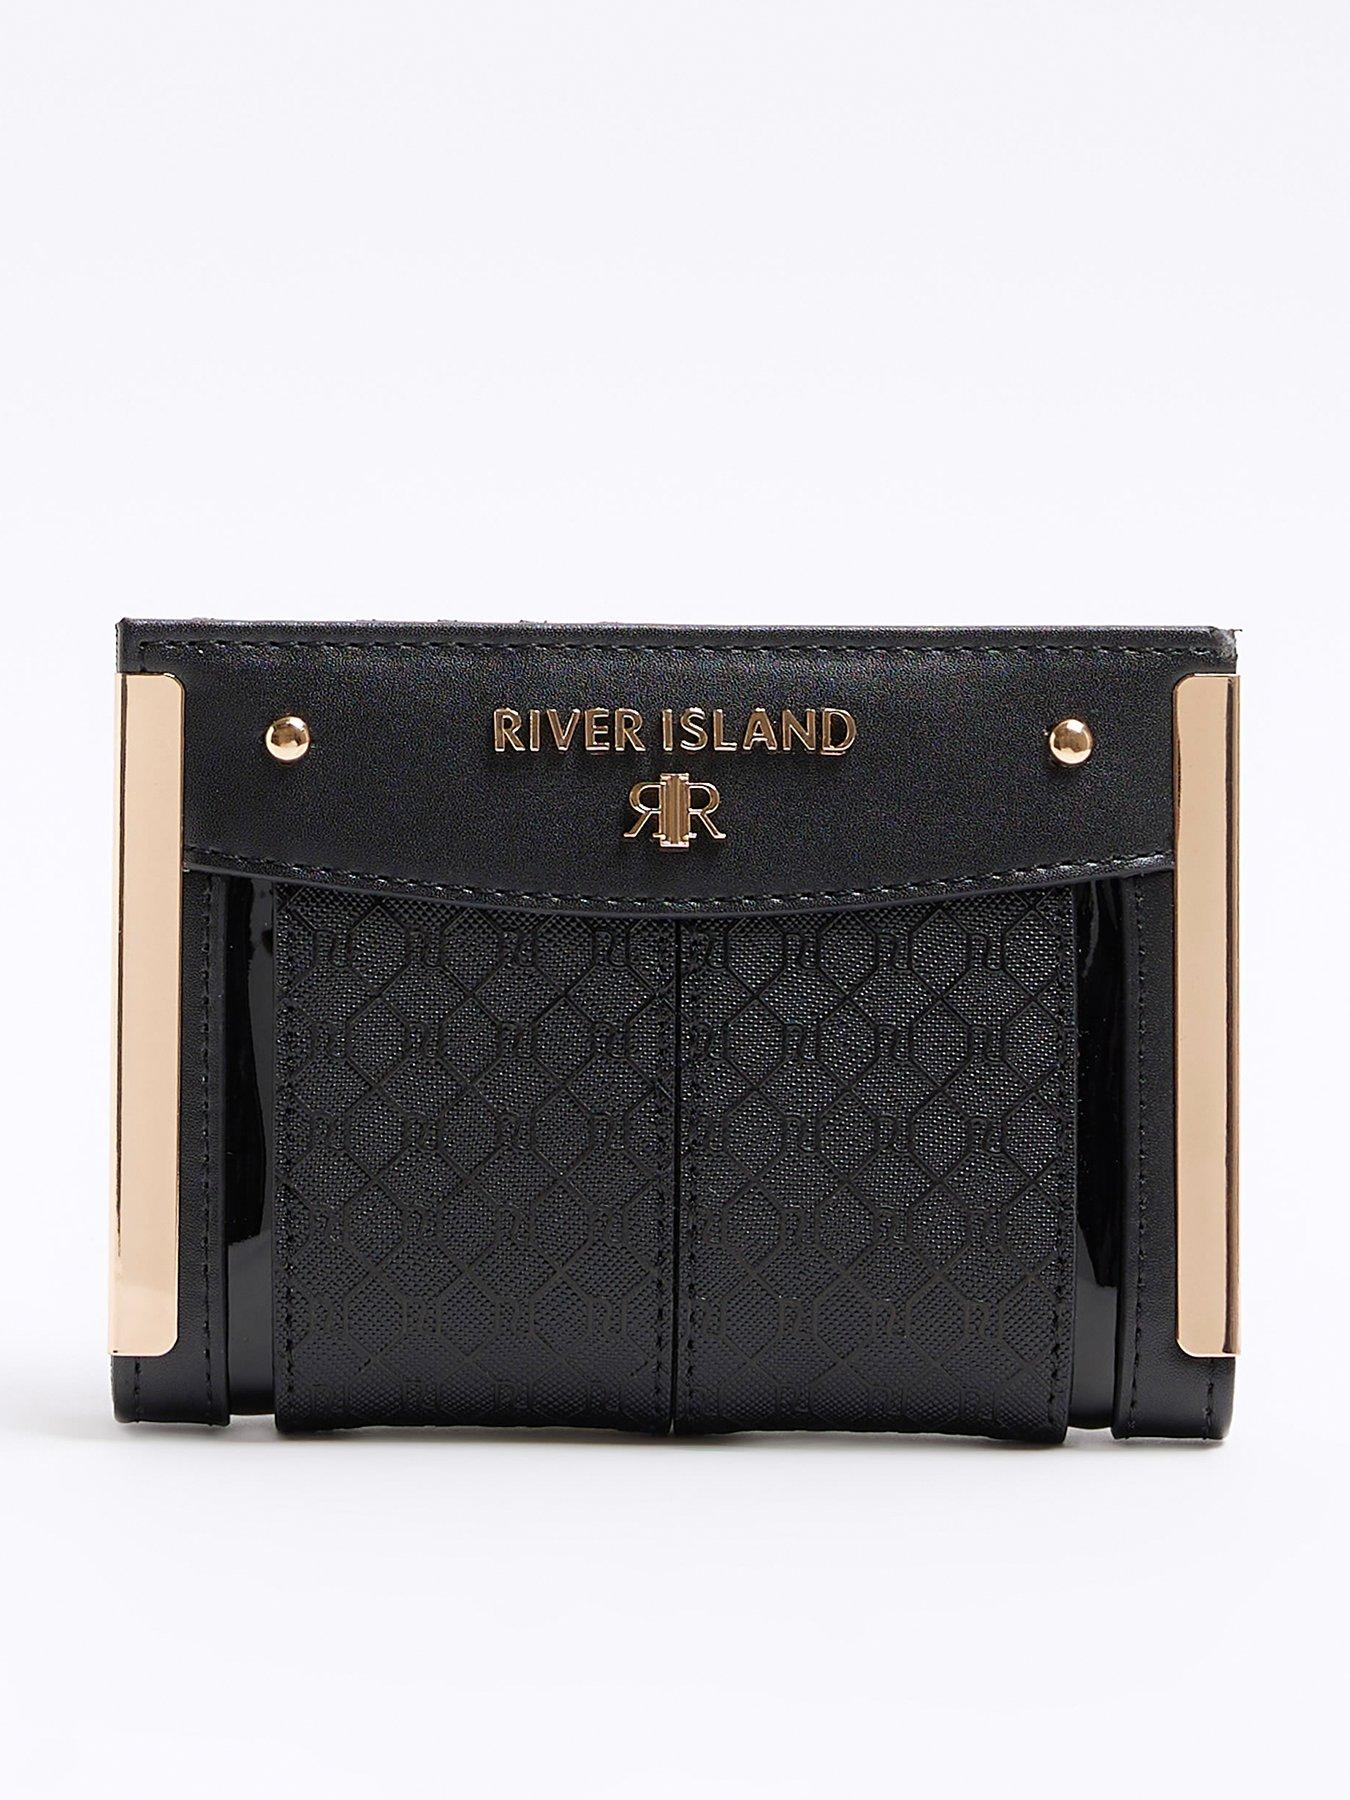 Handbags | Handbags for Women | Women Purse | River Island | Bags, River  island handbags, Shoulder bag